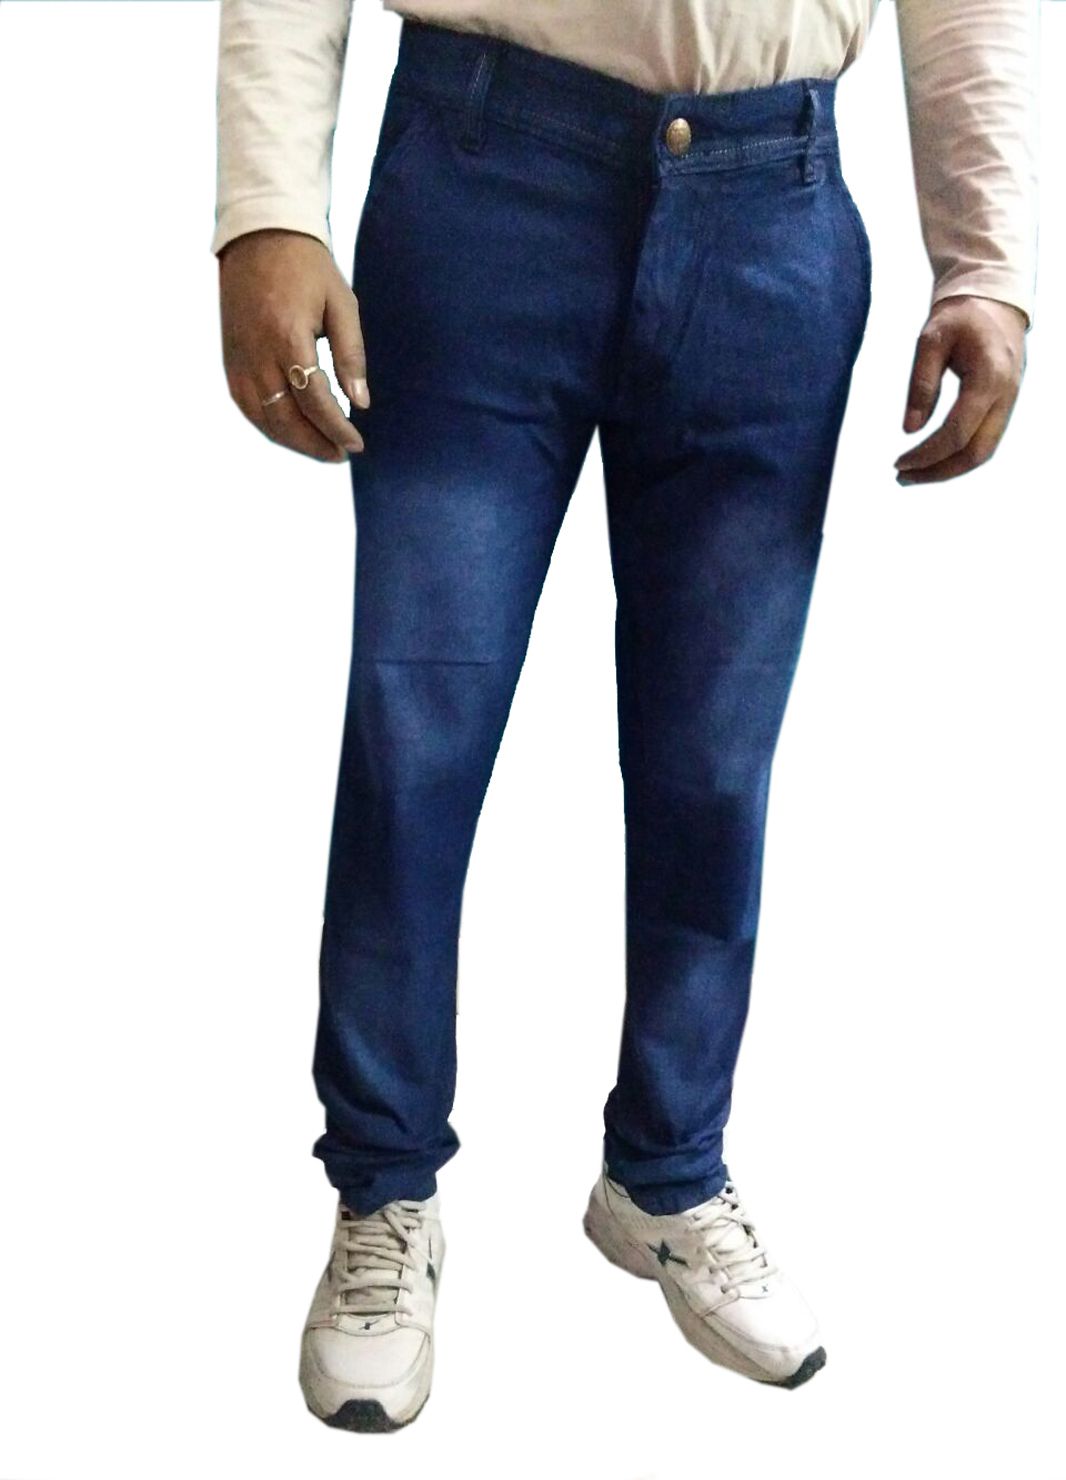 Zimboo Blue Regular Fit Jeans - Buy Zimboo Blue Regular Fit Jeans ...